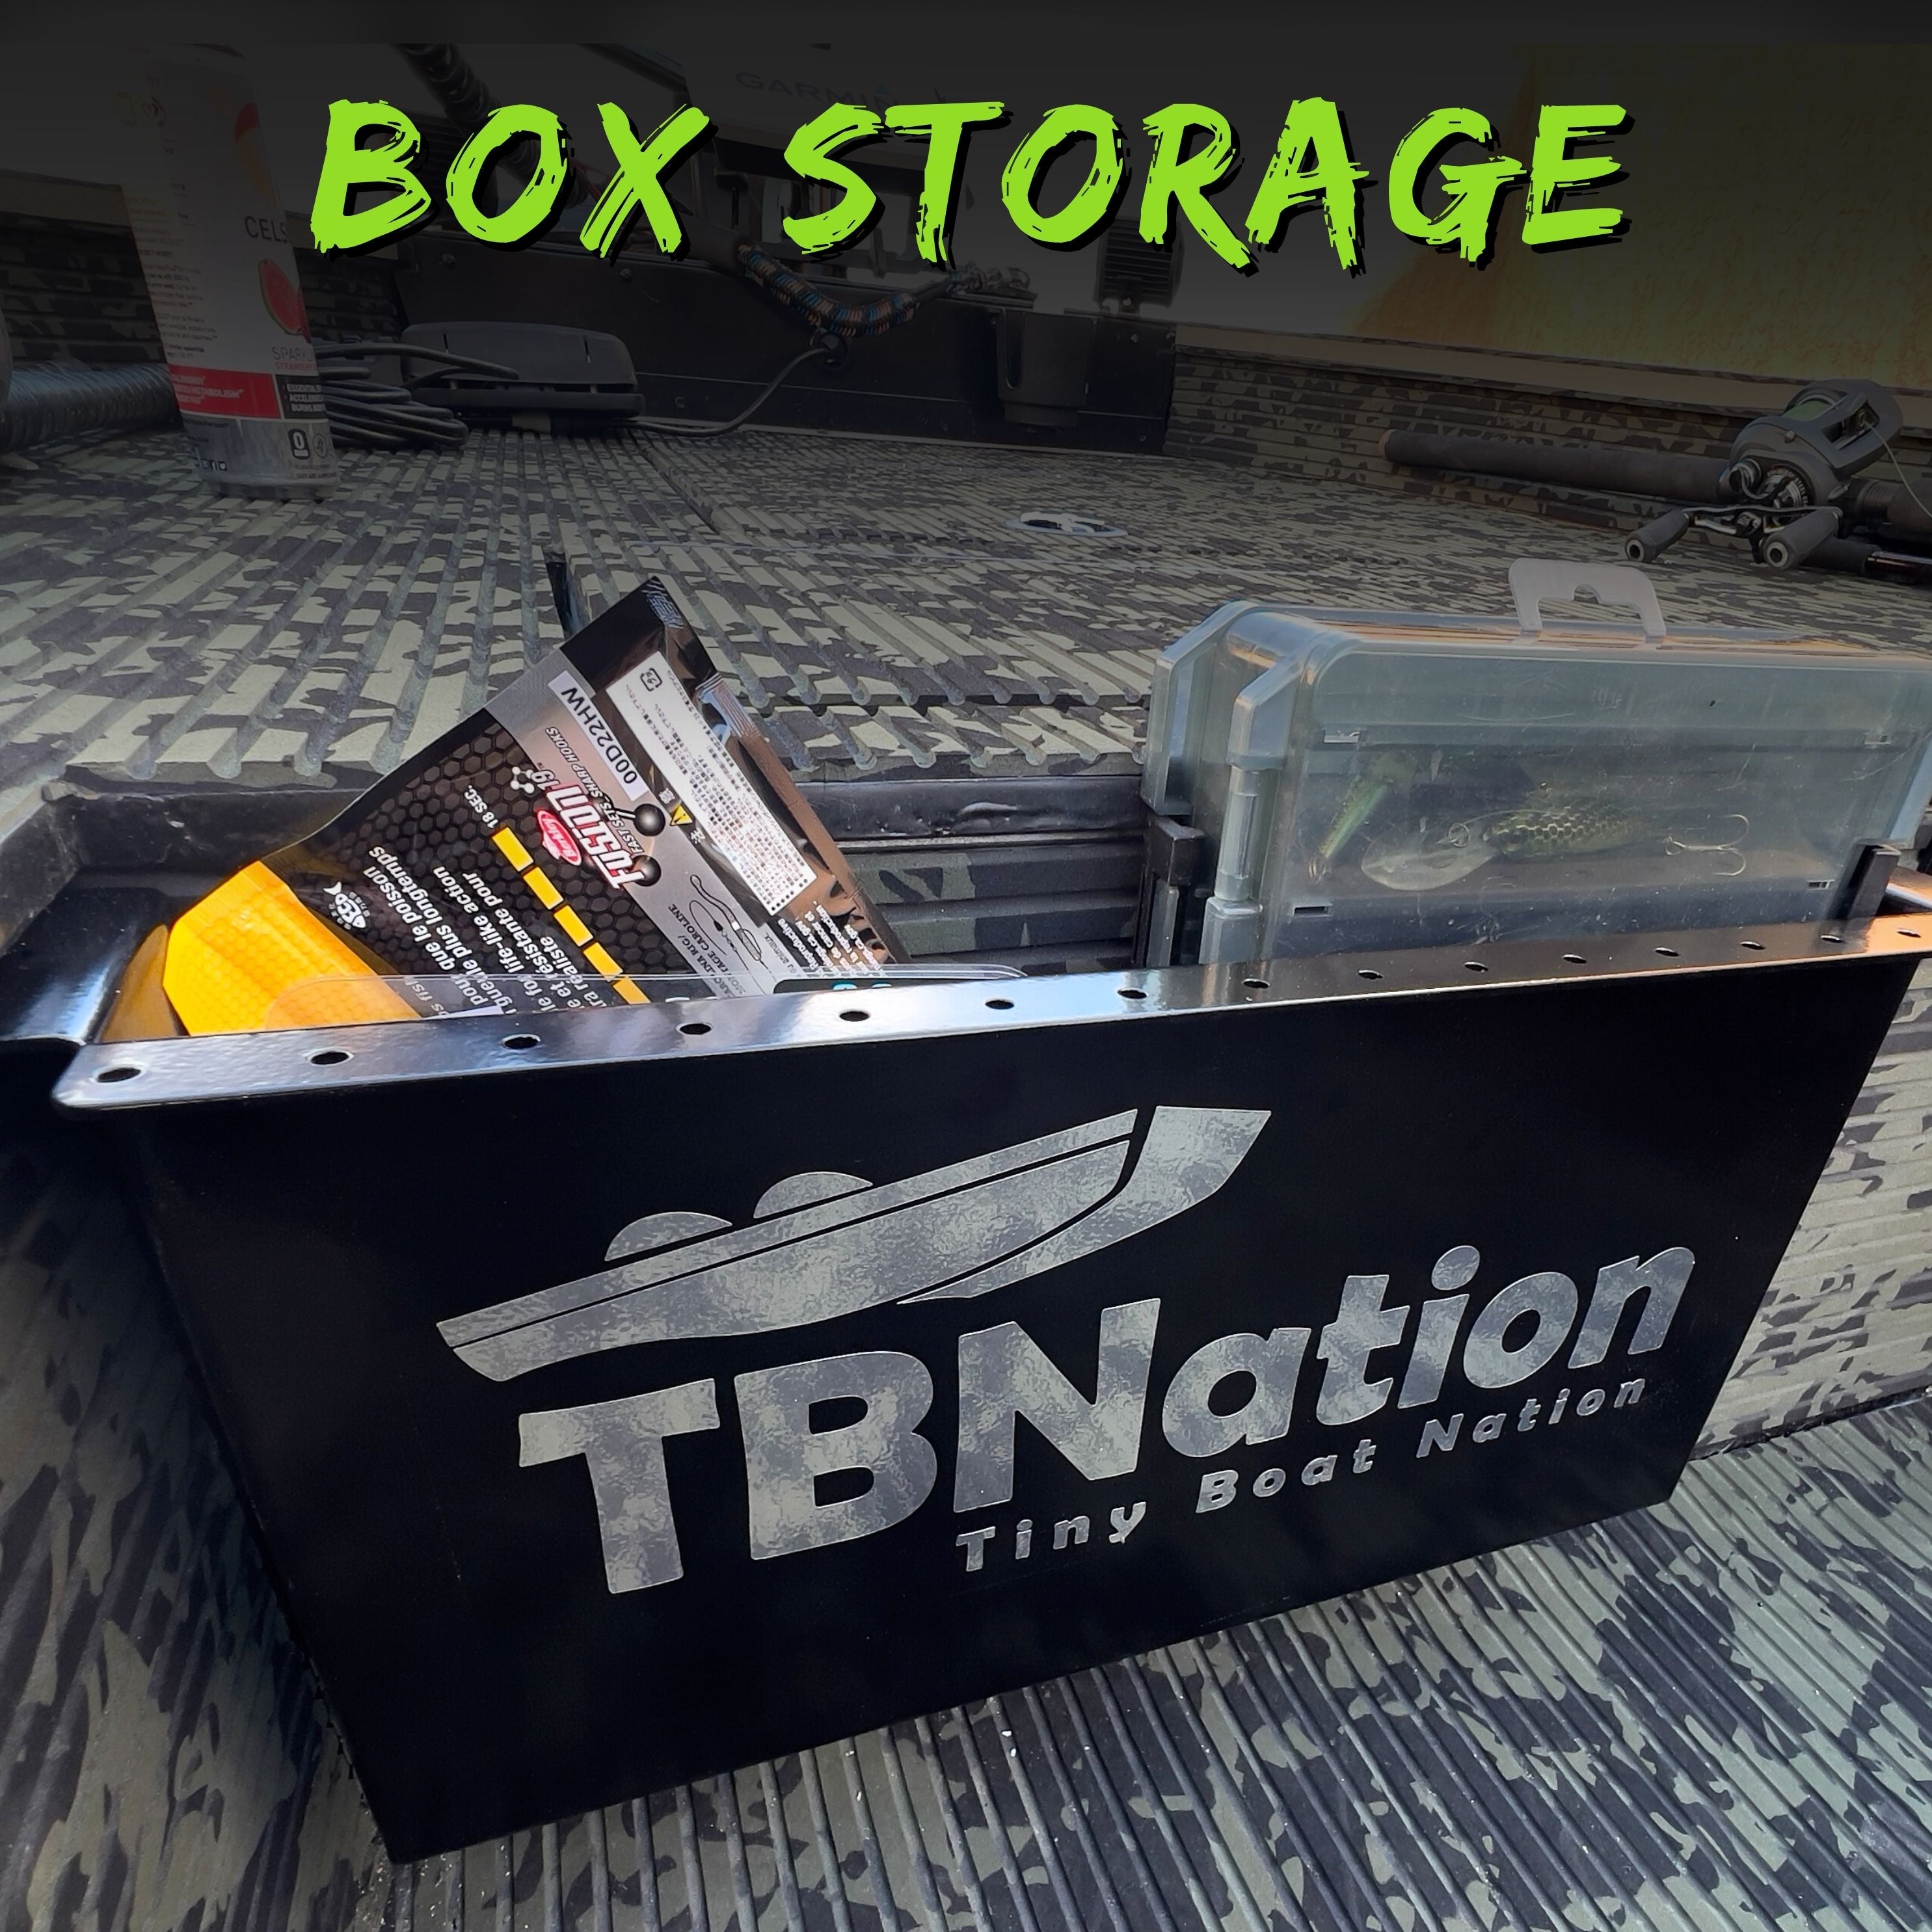 Vertical Day Box storage - Tiny Boat Nation